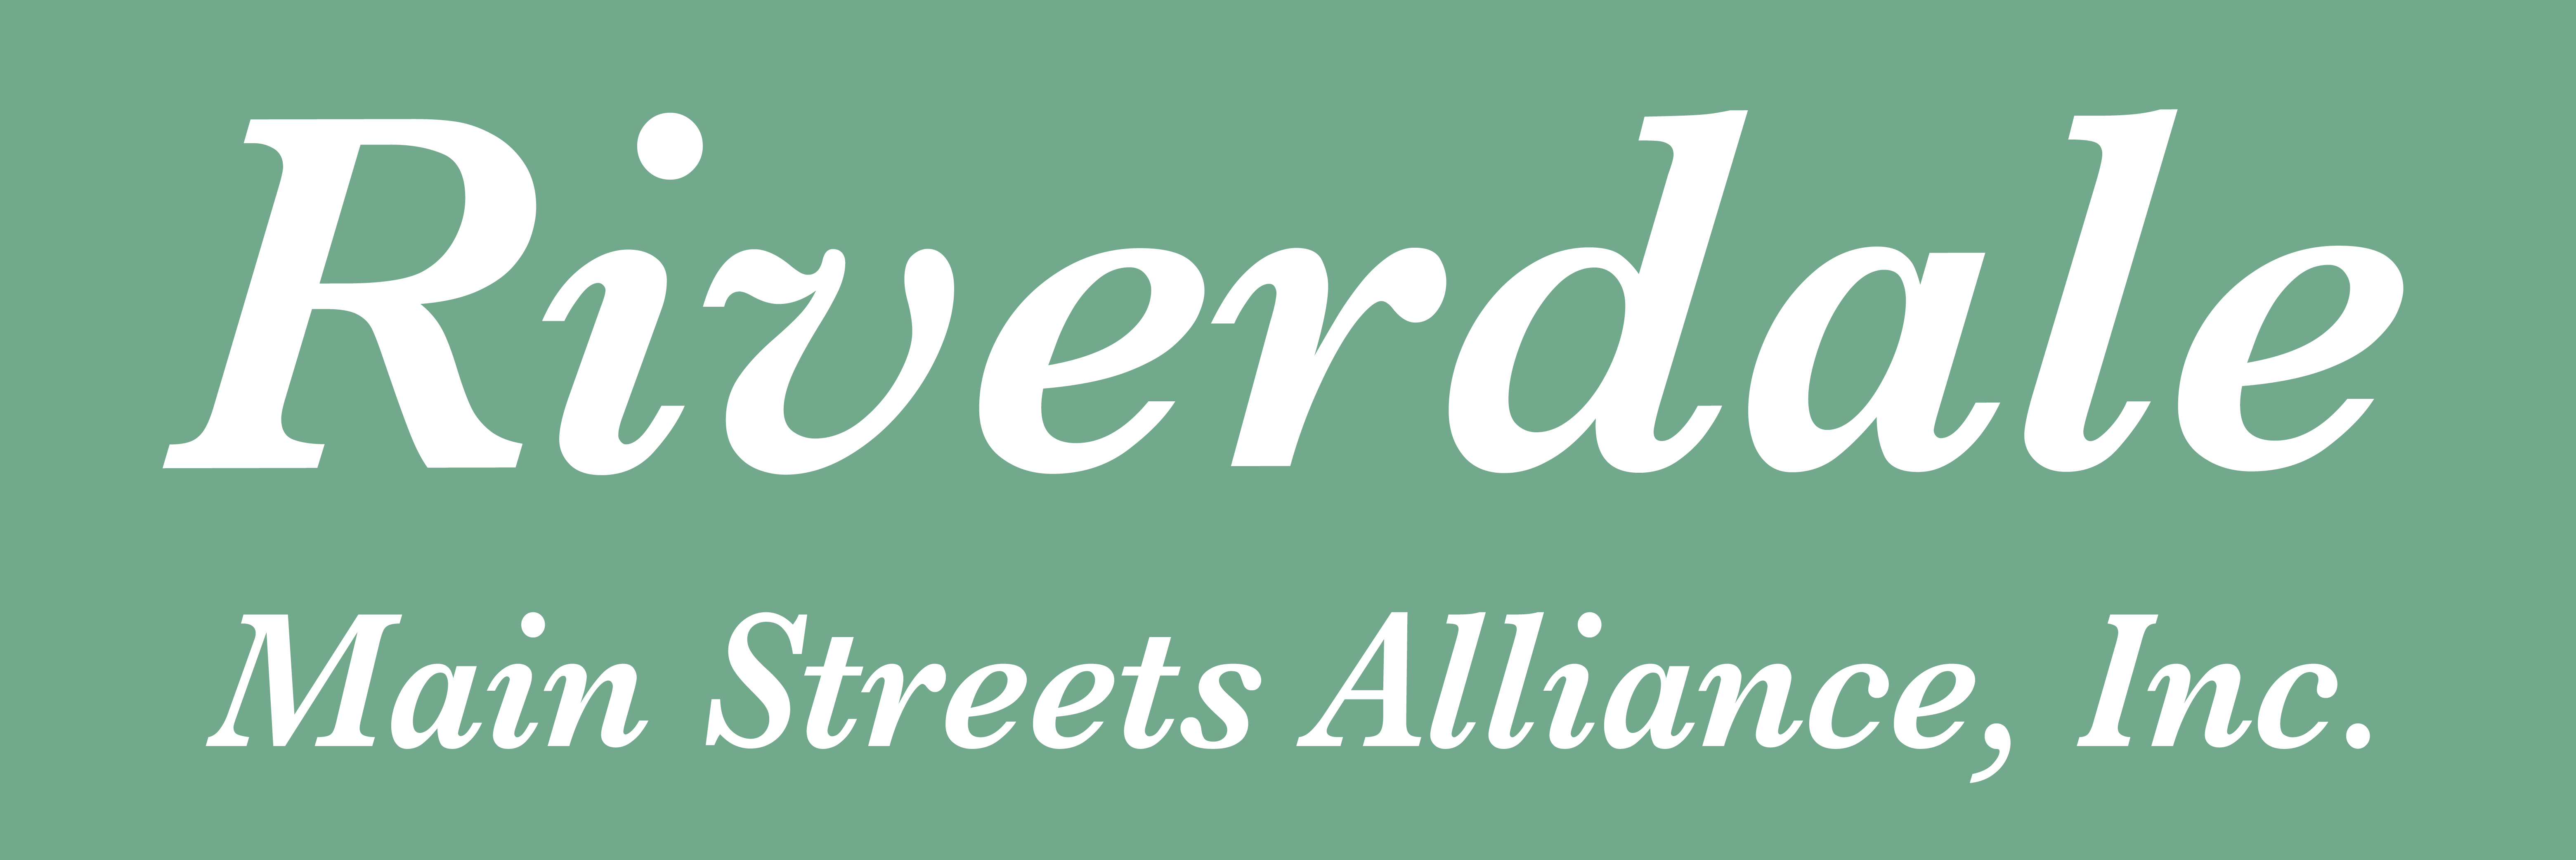 Riverdale Main Streets Alliance, Inc. logo